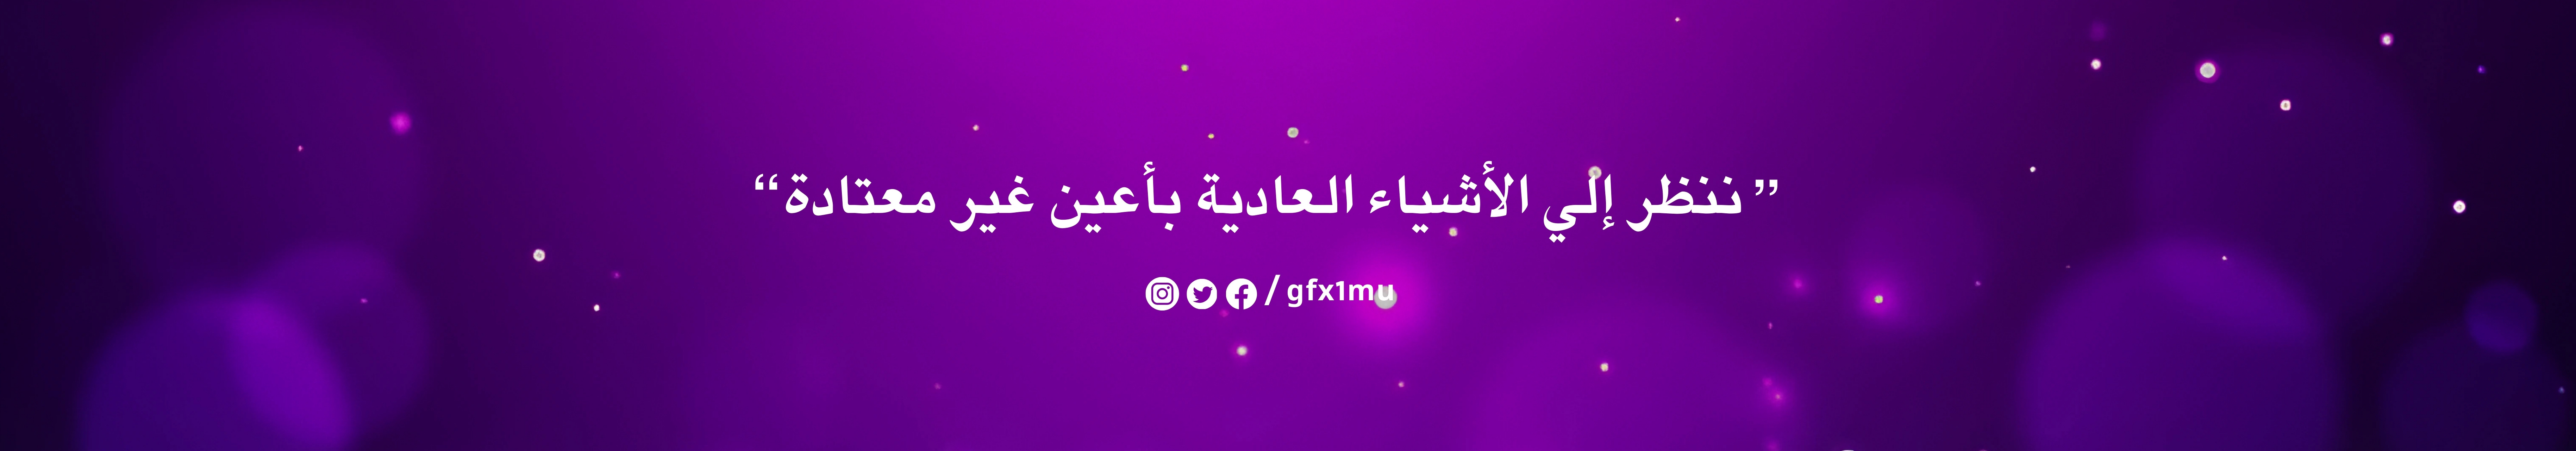 munzir GFX's profile banner